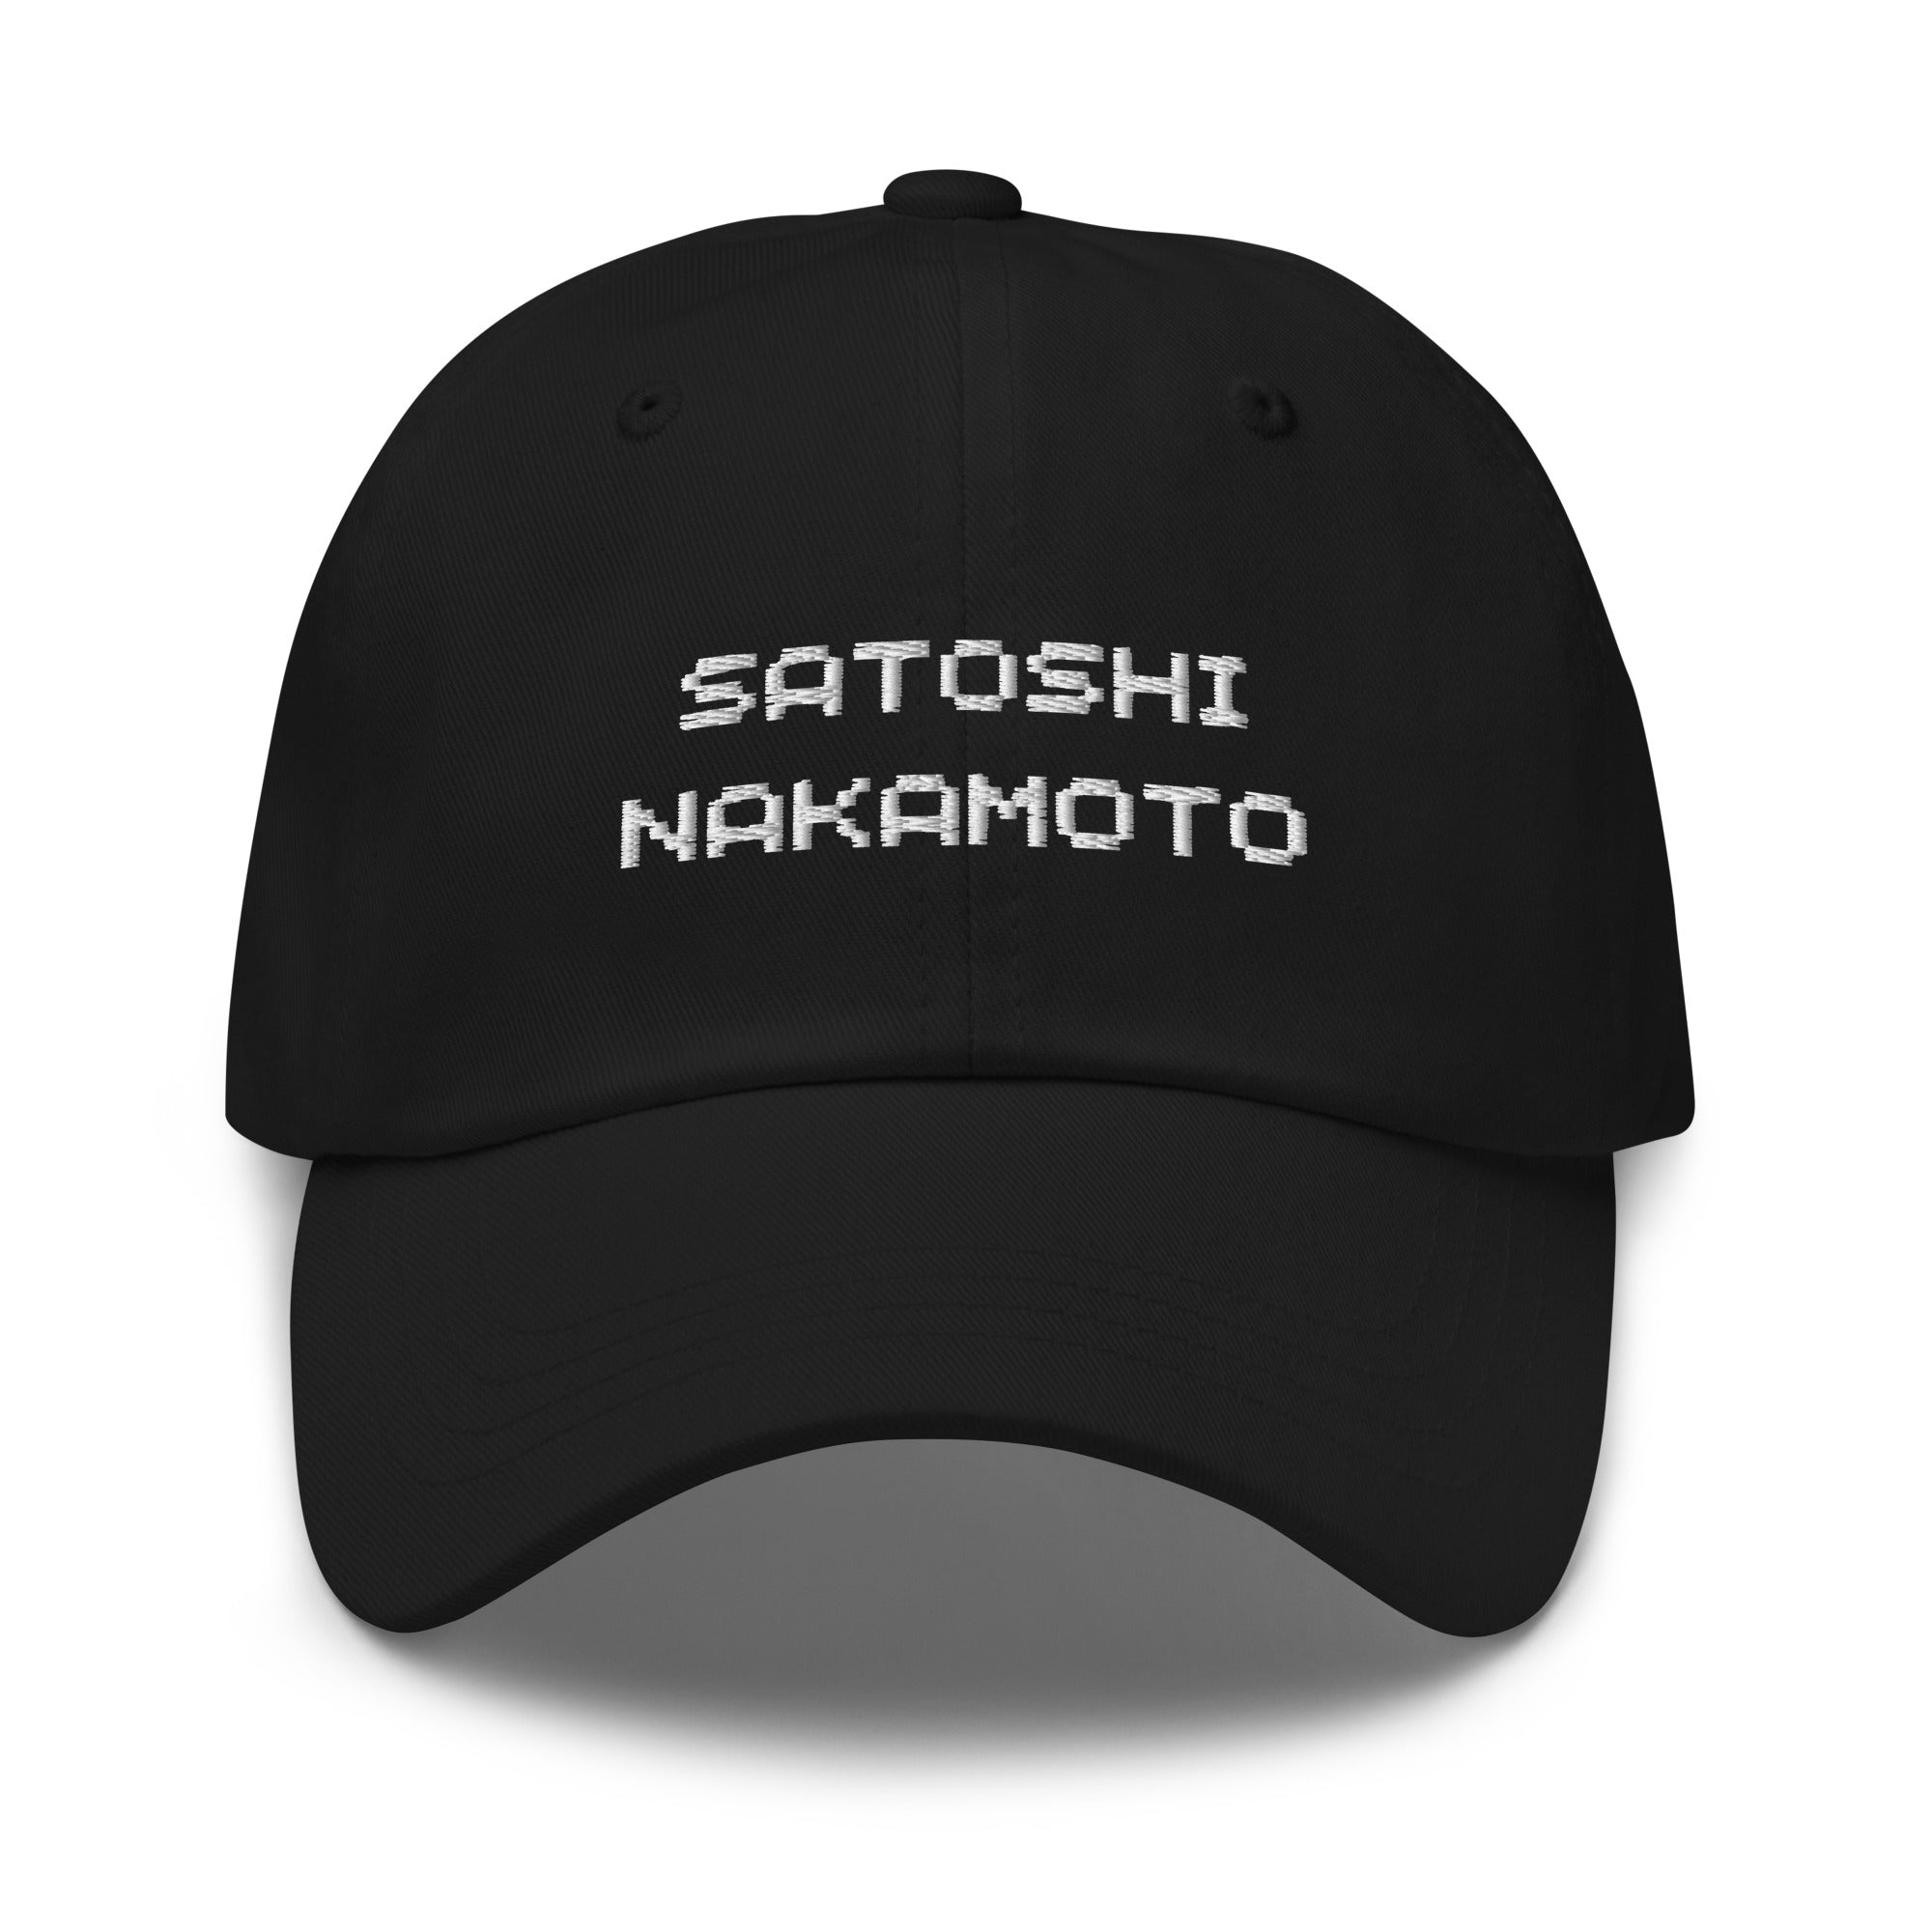 SATOSHI NAKAMOTO Dad hat